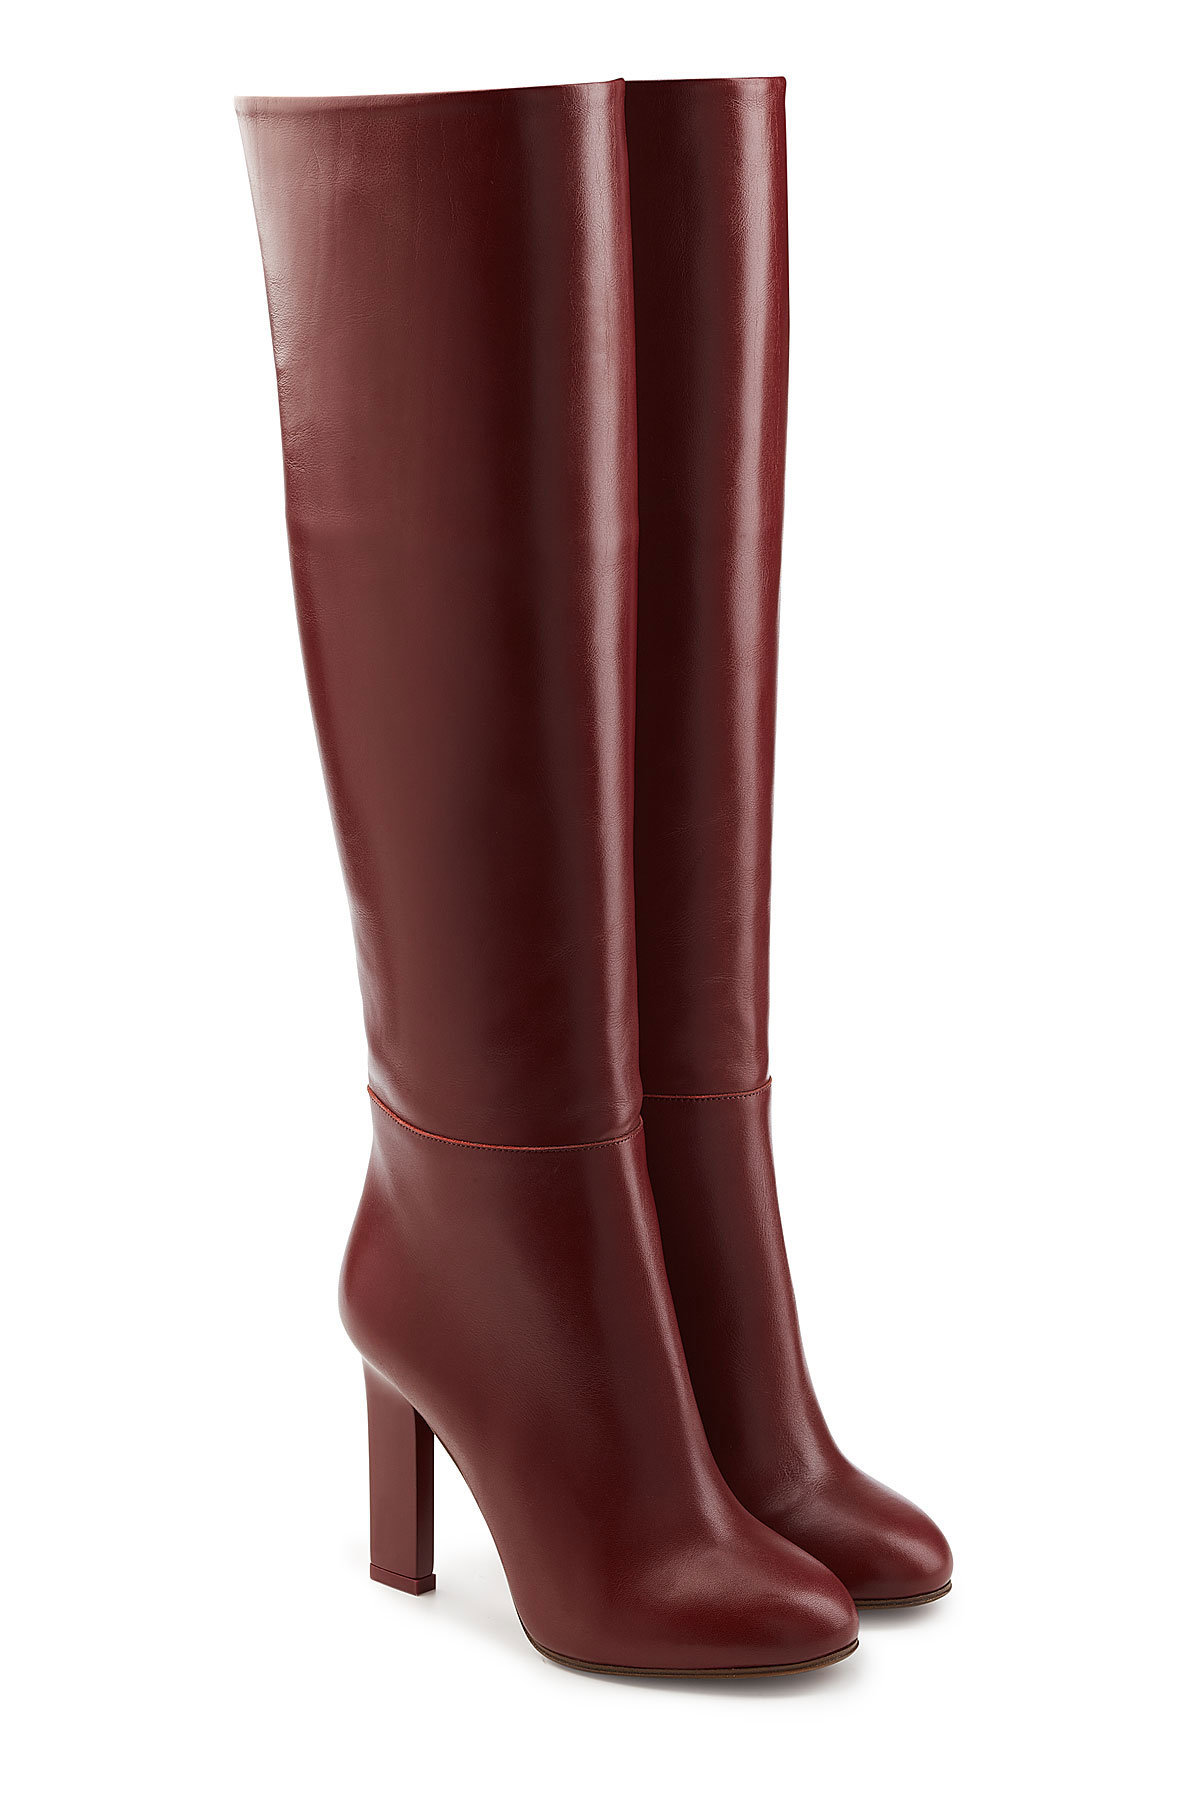 Victoria Beckham burgundy knee high boots